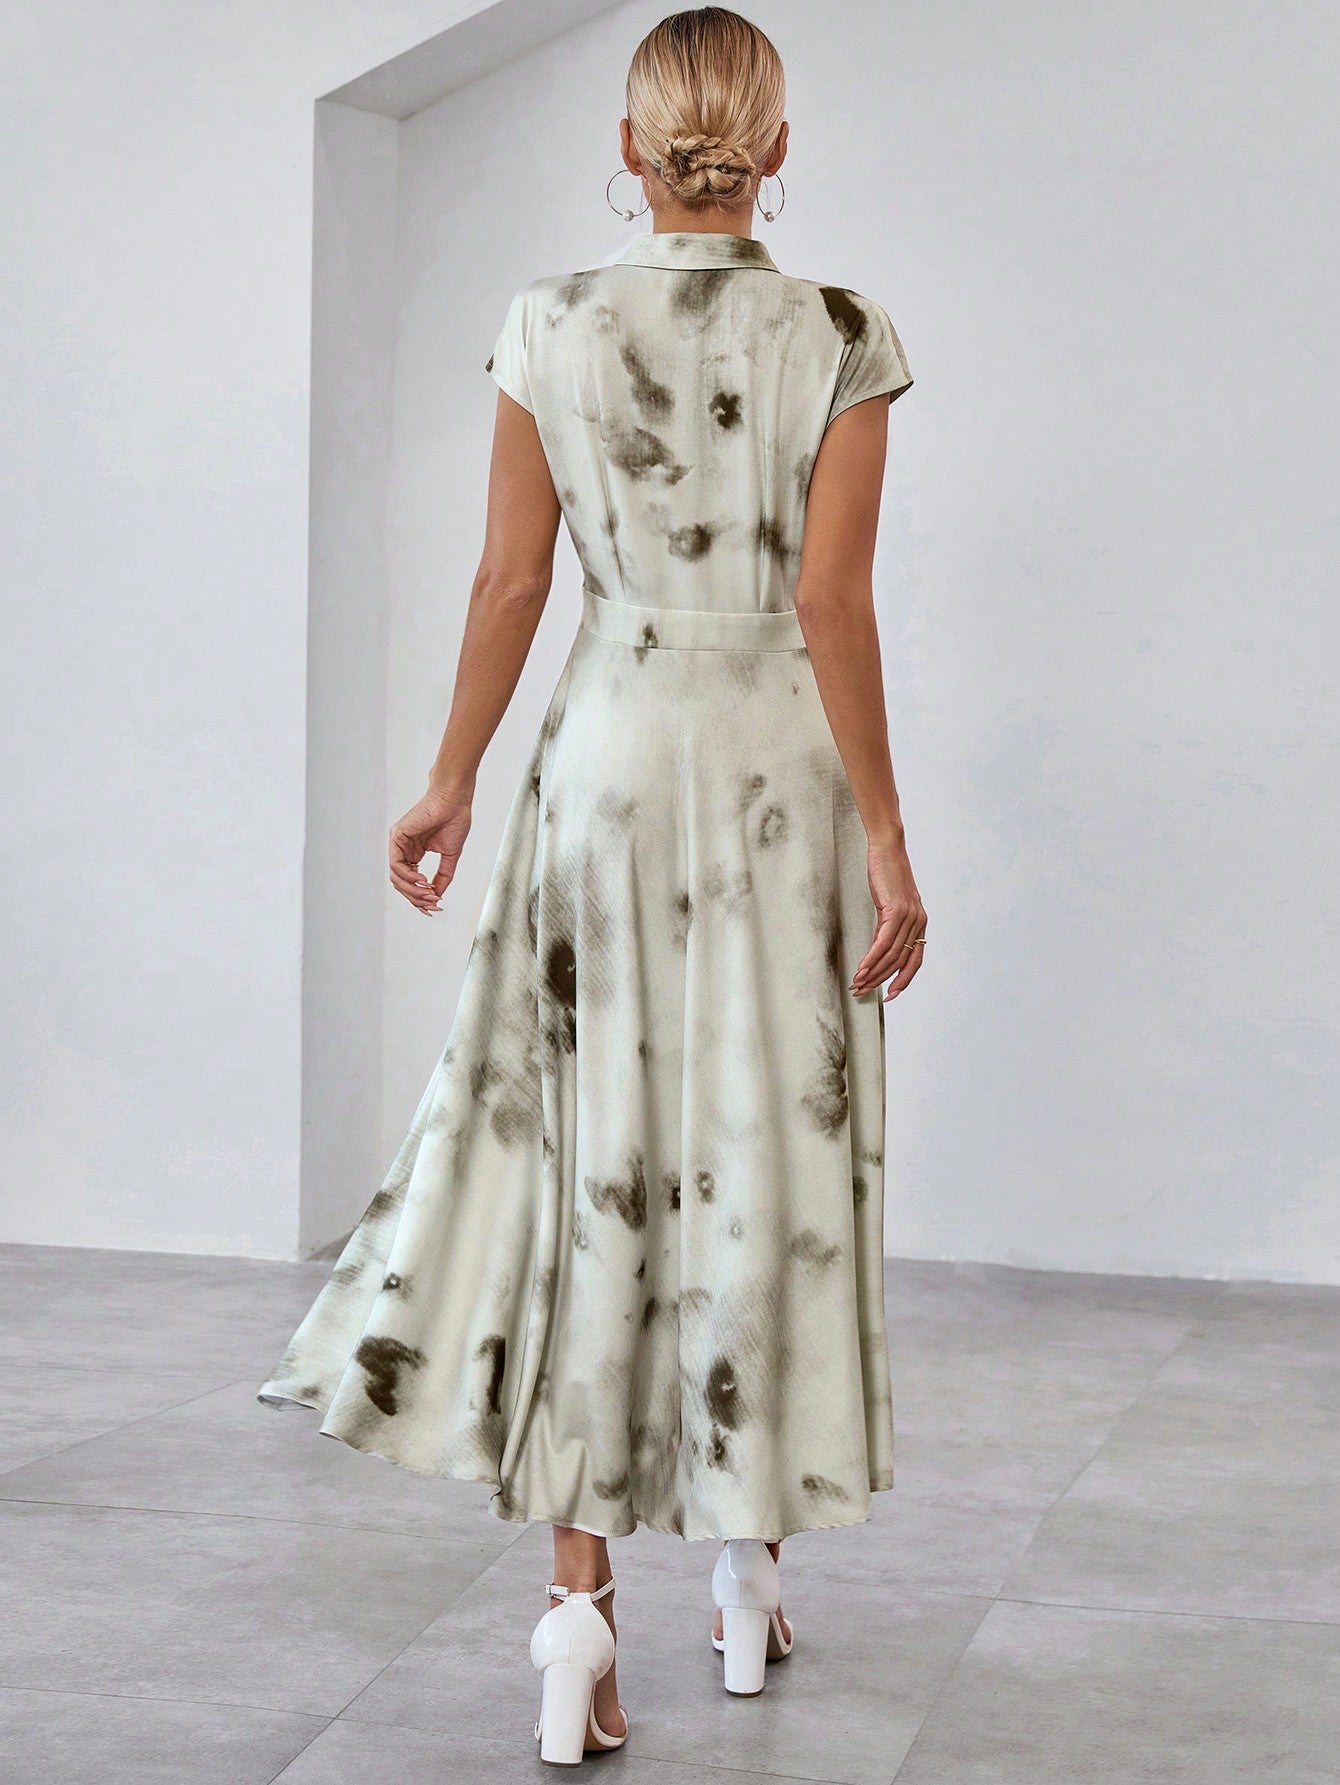 SHEIN BIZwear Tie-Dye Printed Dress